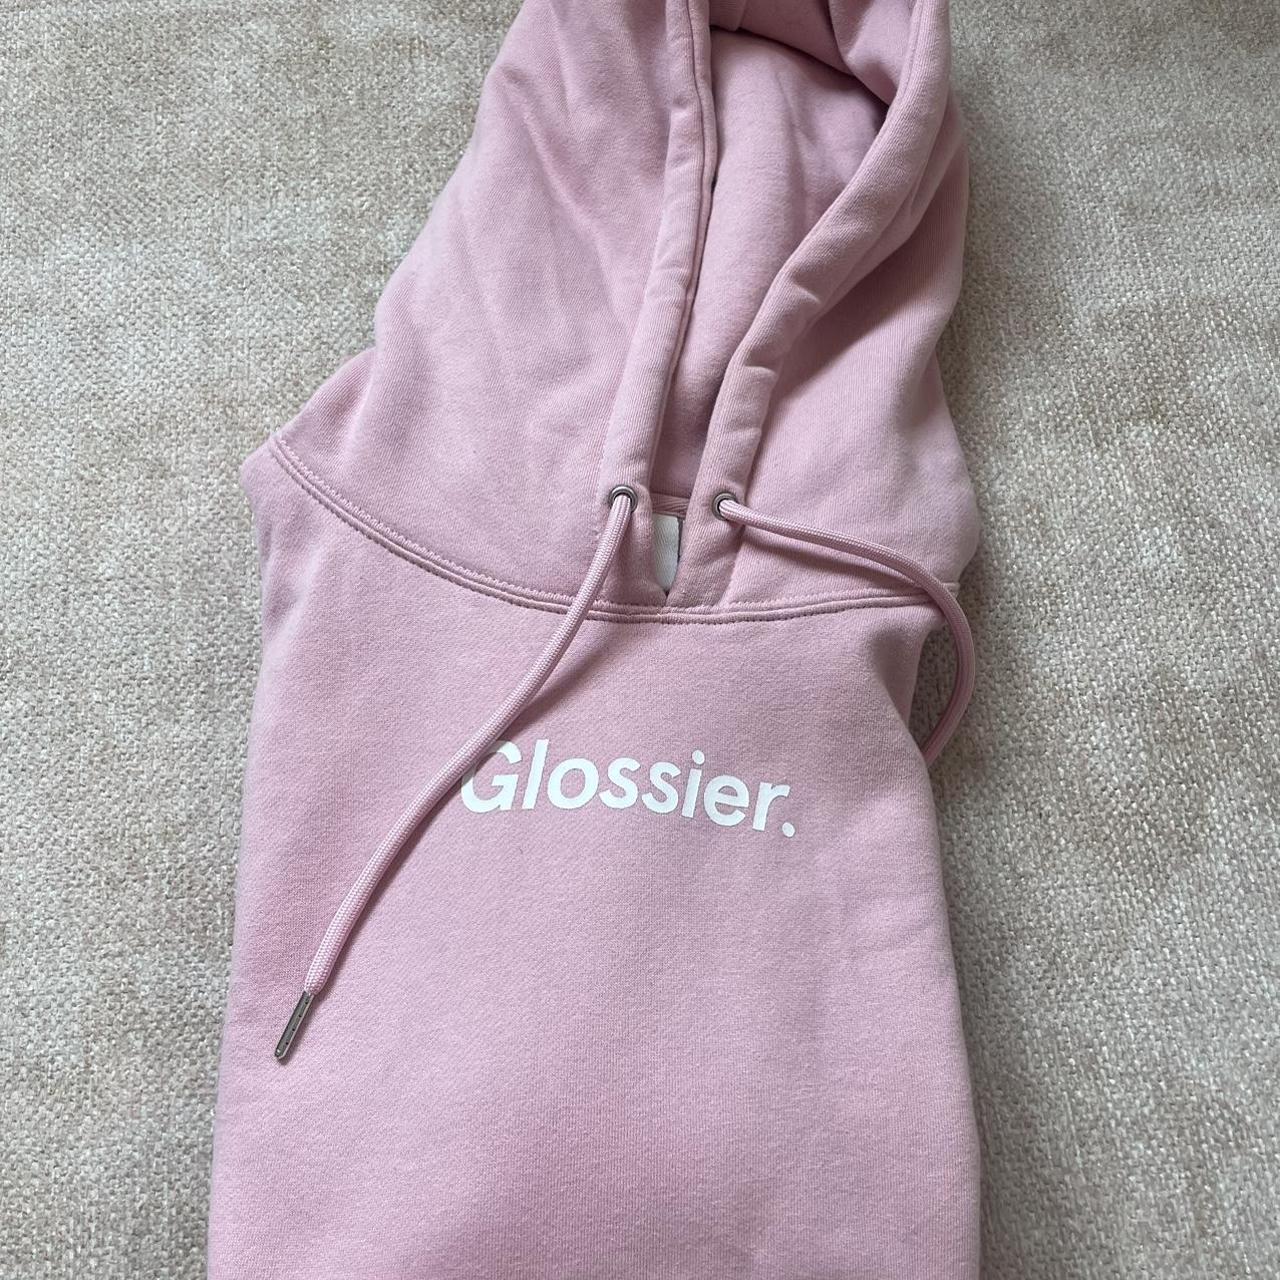 Glossier Women's Pink Sweatshirt (4)